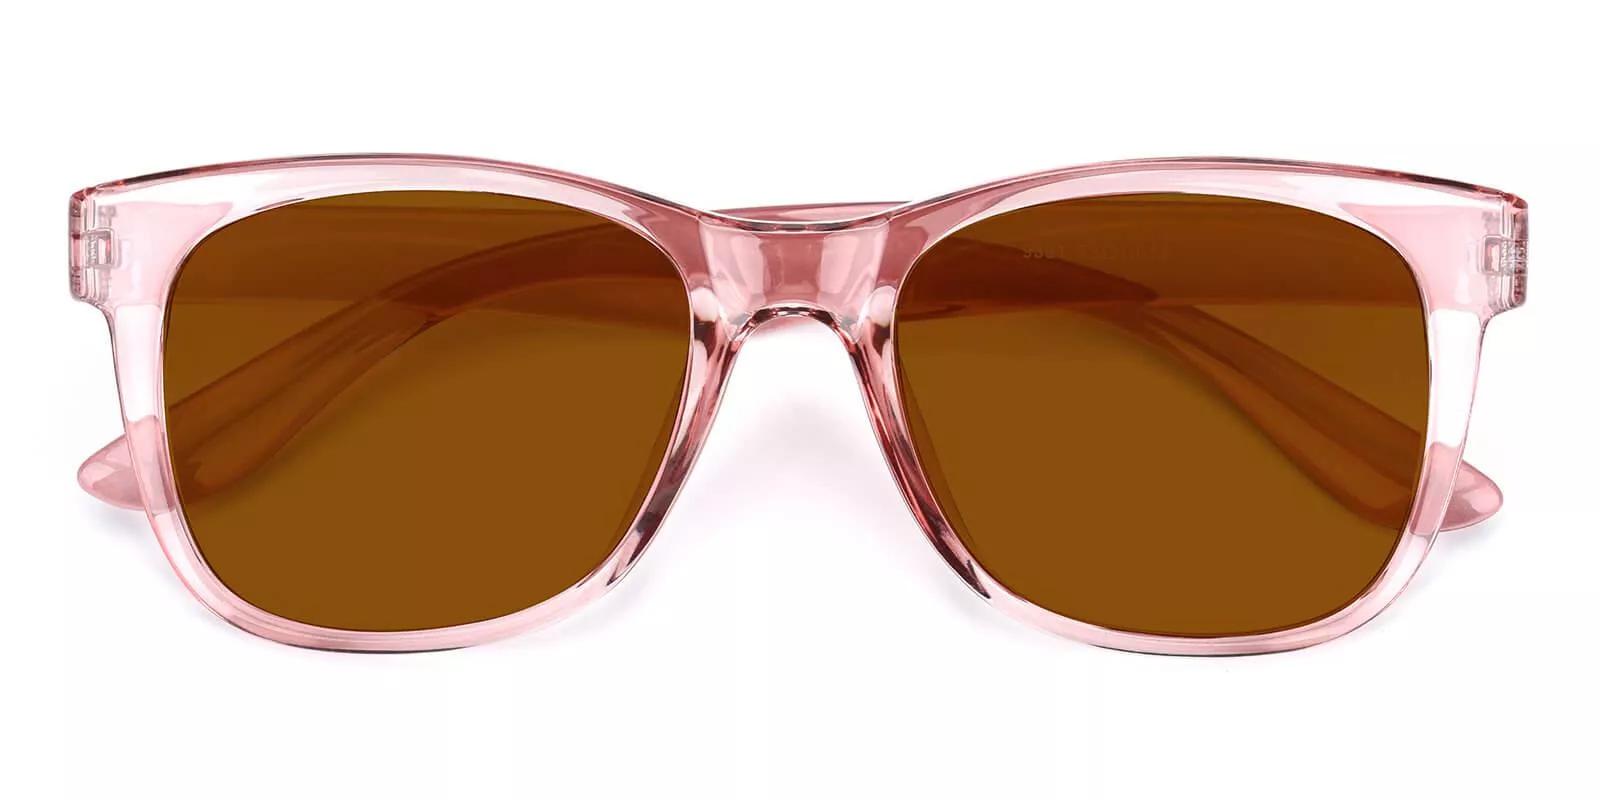 Fairfield Prescription Sunglasses Clear Pink